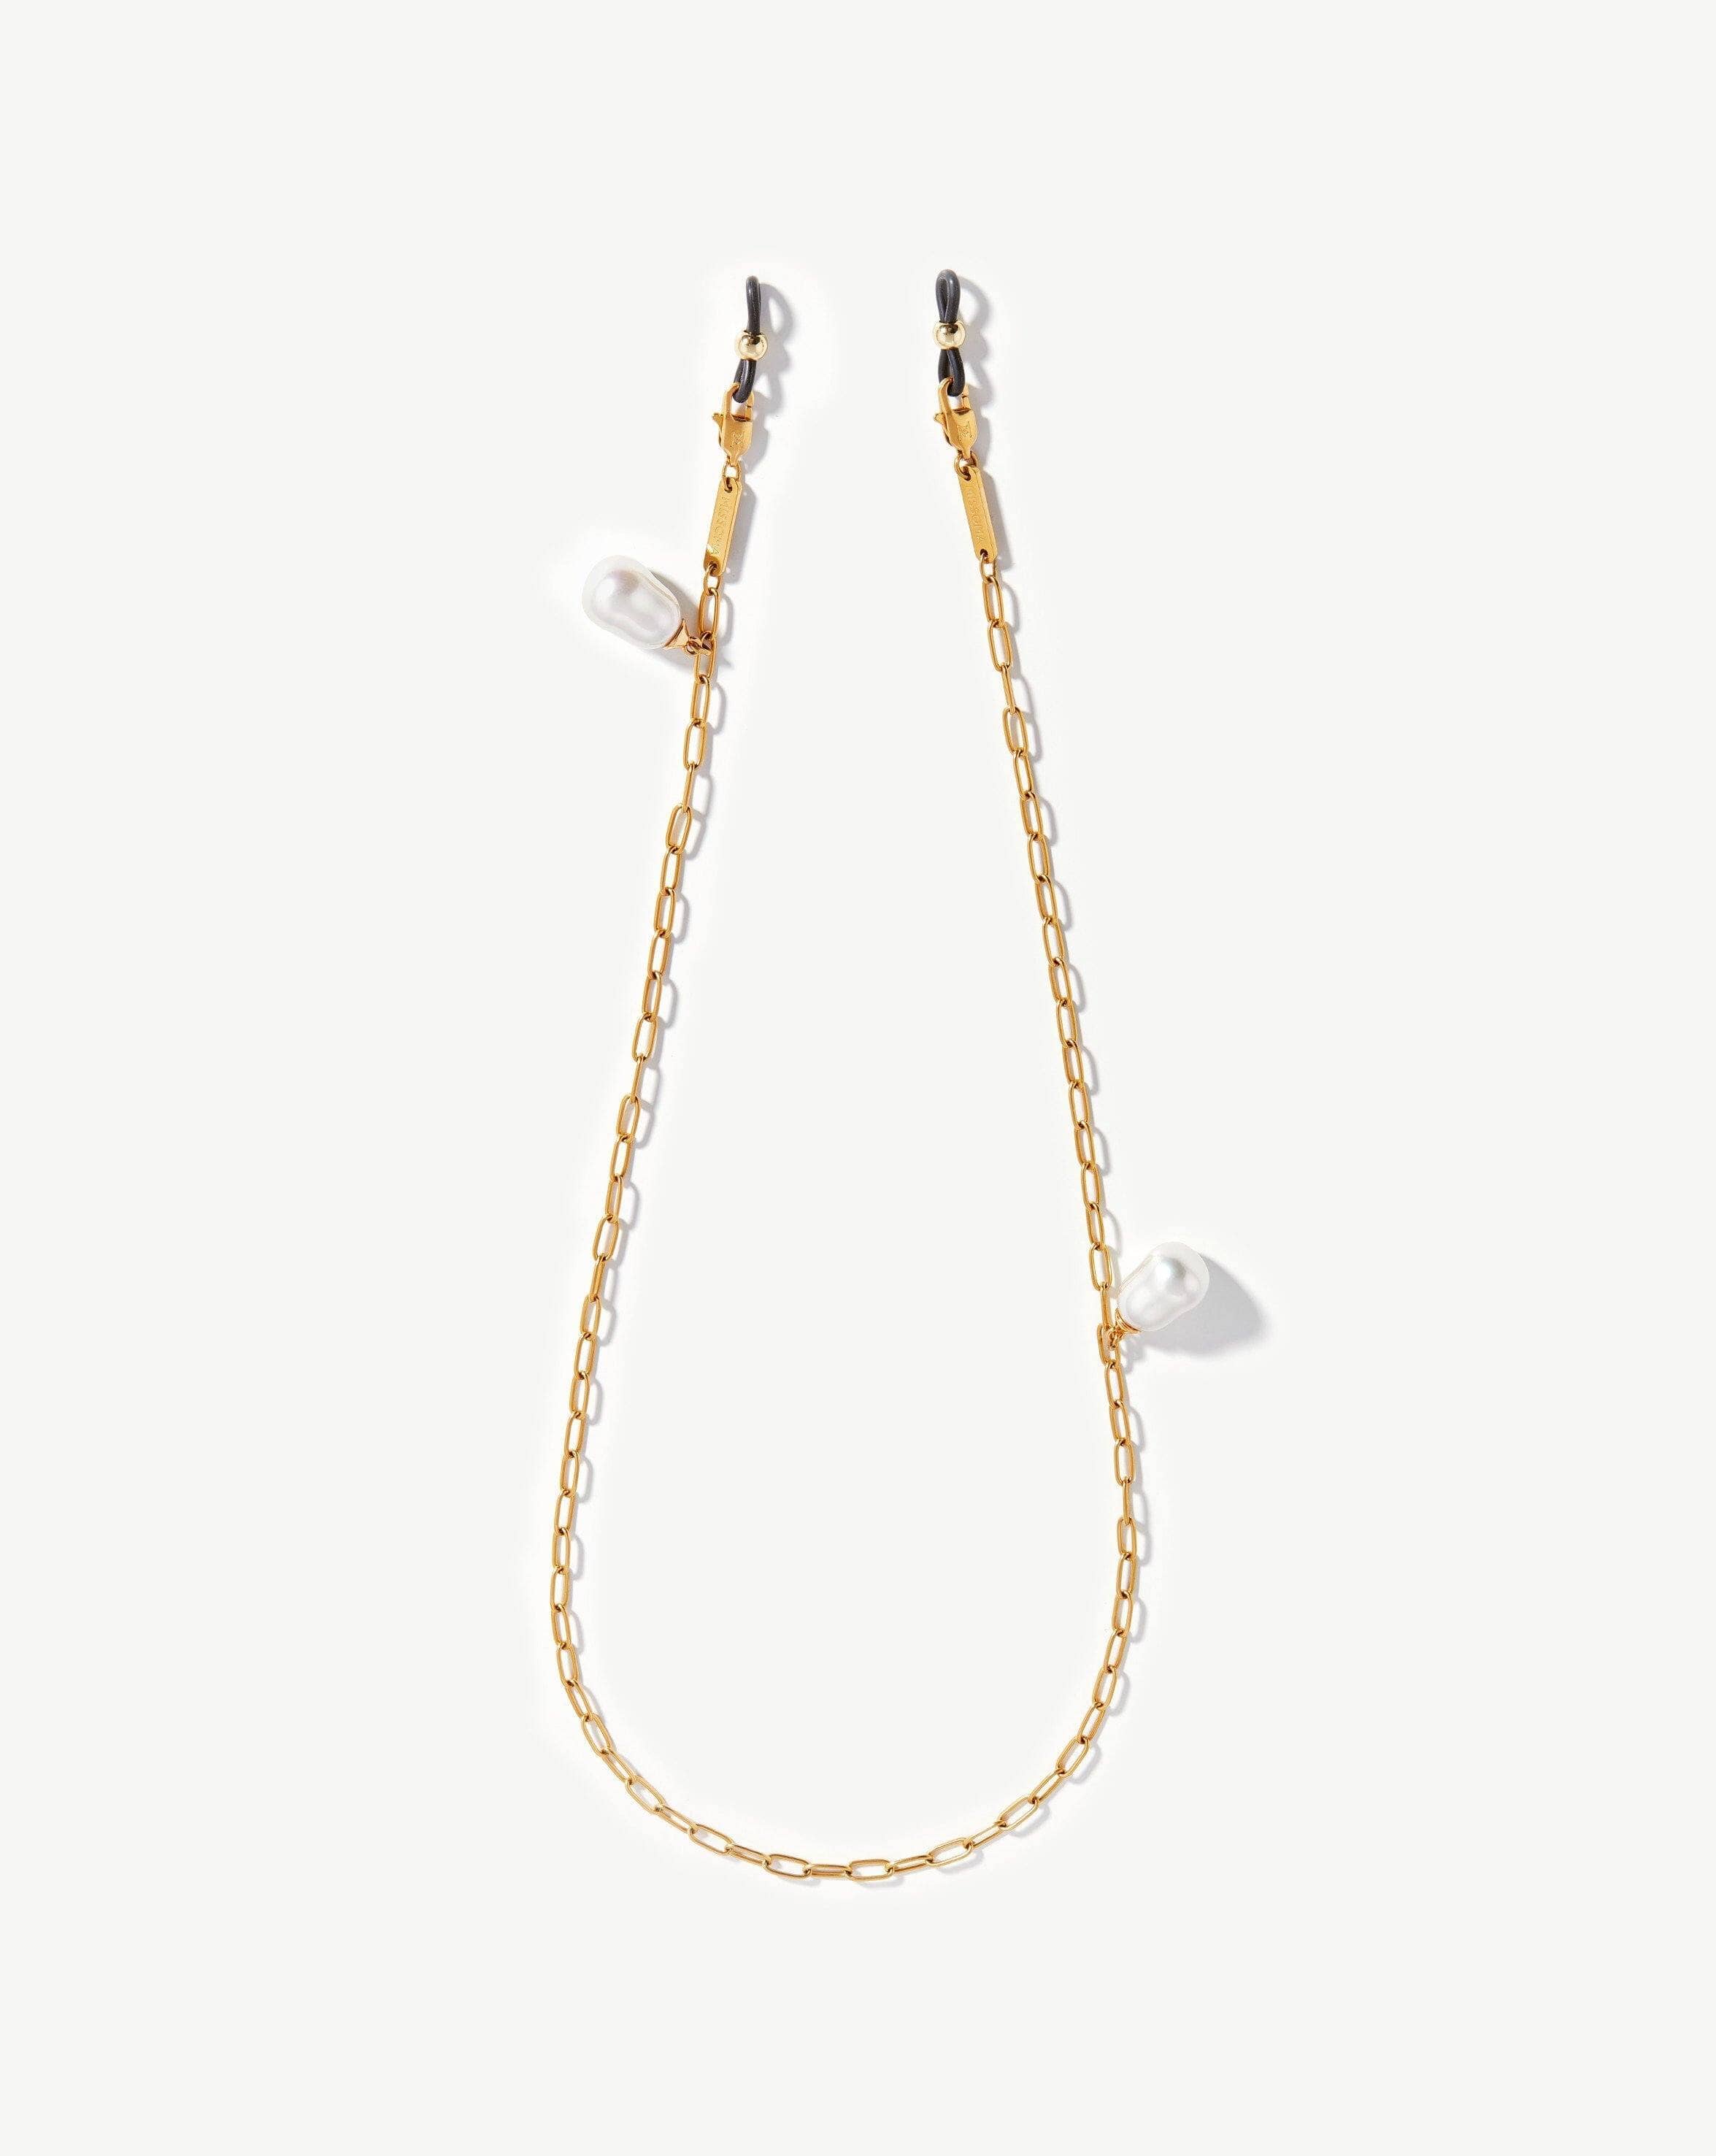 Baroque Pearl Charm Eyewear Chain | 18ct Gold Plated/Pearl Eyewear Chain Missoma 